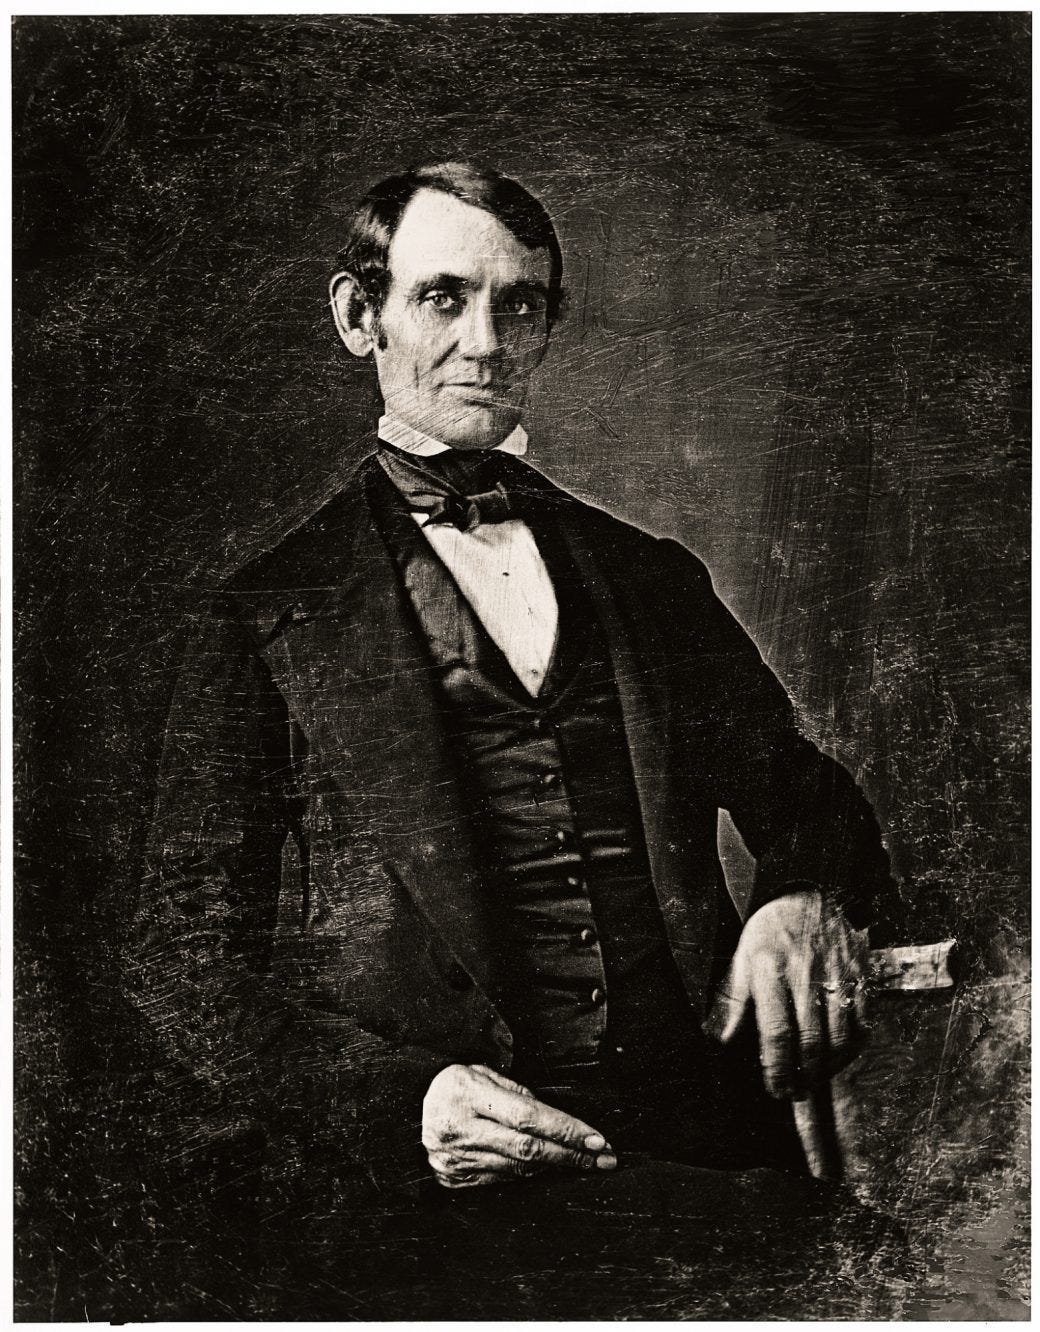 Shepherd, Nicholas H, photographer. Abraham Lincoln, Congressman-elect from Illinois. Three-quarter length portrait, seated, facing front. , 1846. [Springfield, Ill., or 1847] Photograph. https://www.loc.gov/item/2004664400/.